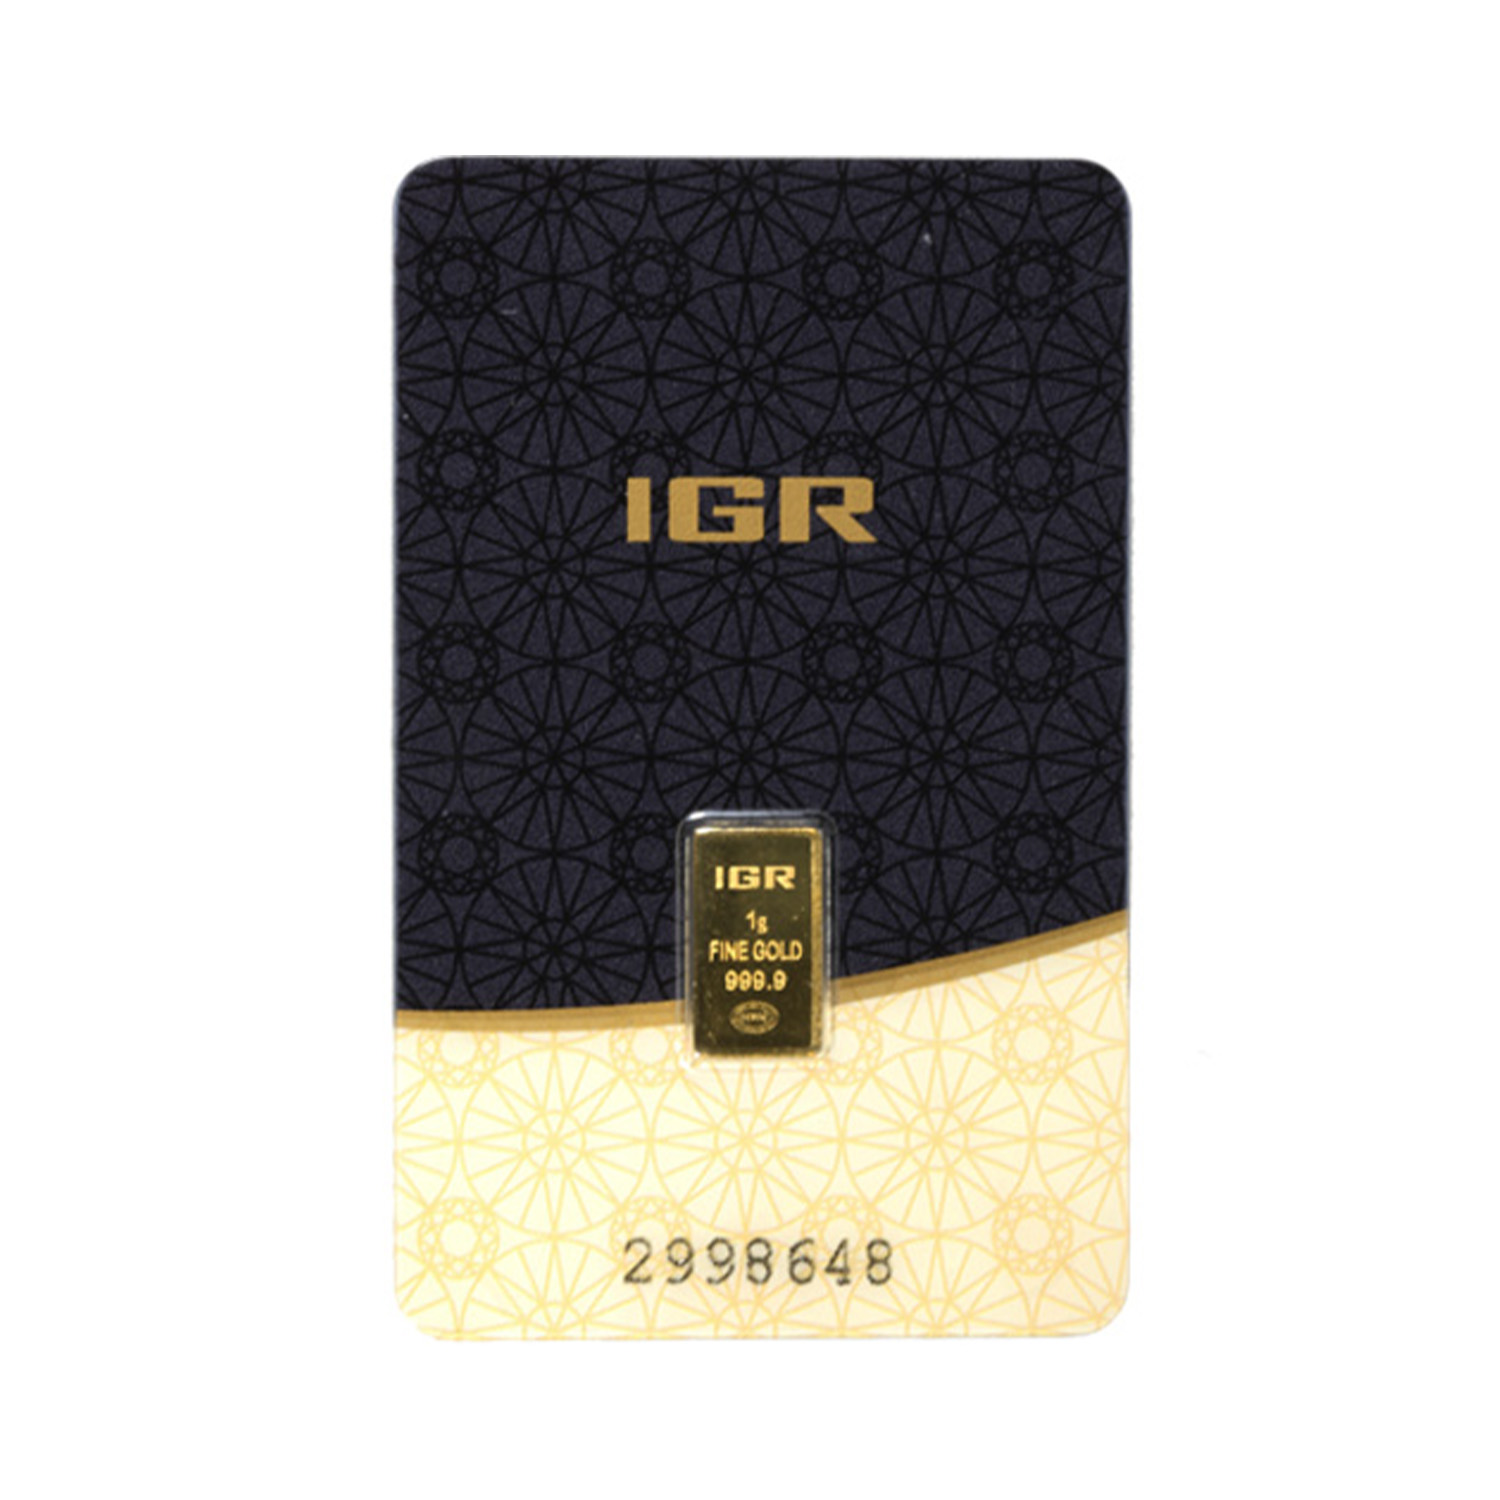 1g gold bar - IGR packaging front